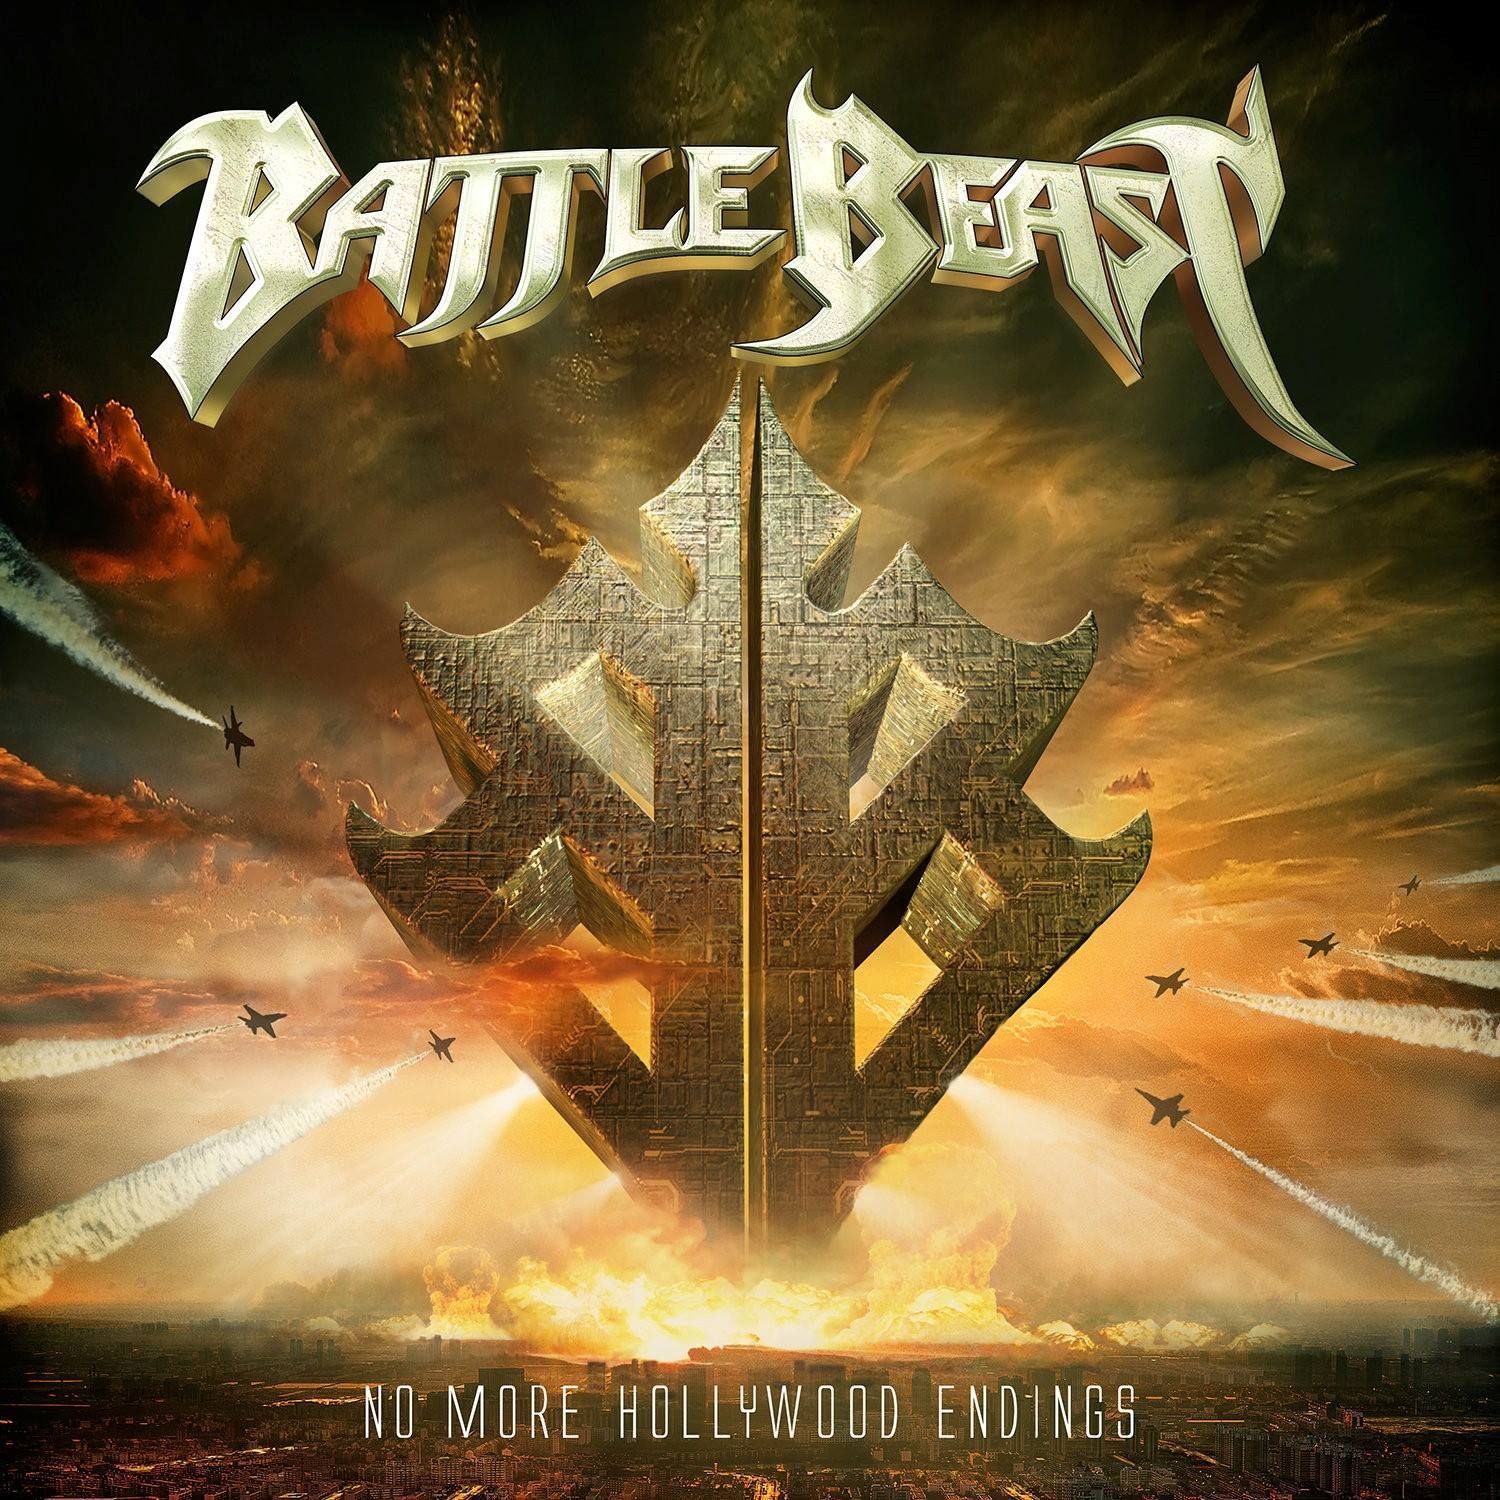 Battle Beast - The Golden Horde (lyric video)